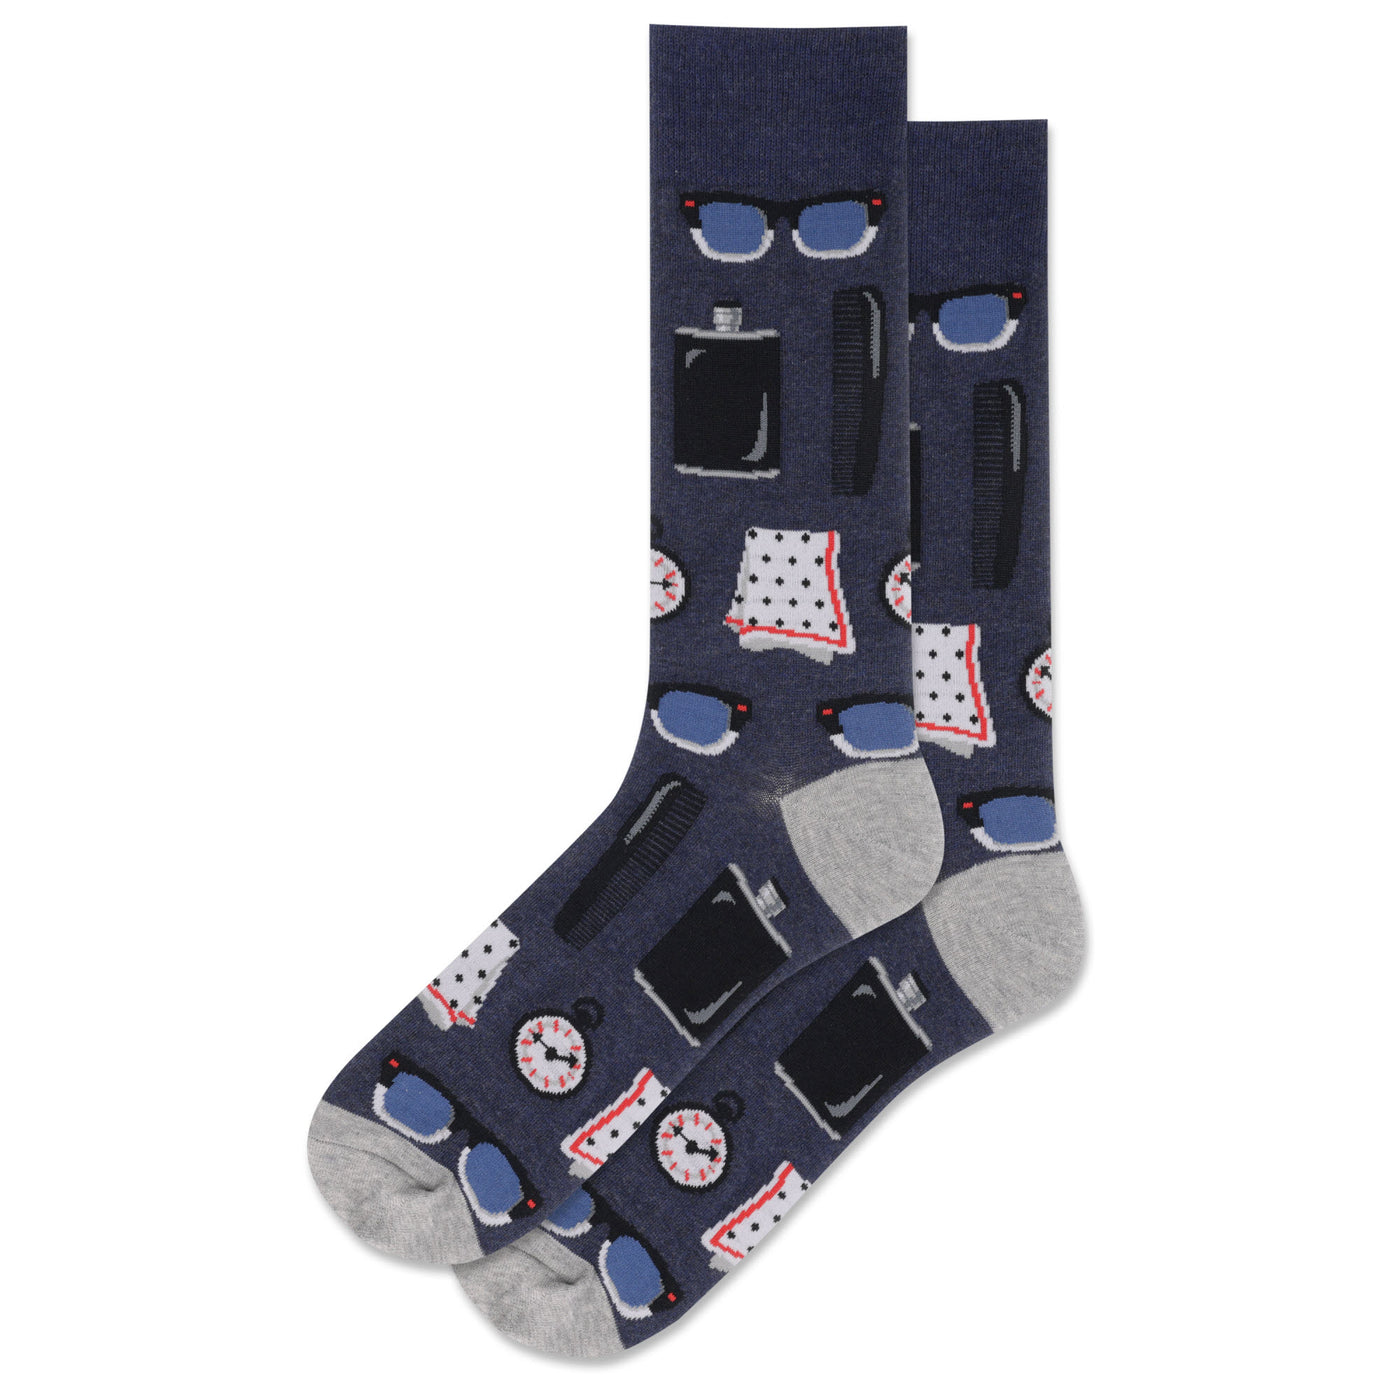 "Gentleman" Crew Socks by Hot Sox - Large